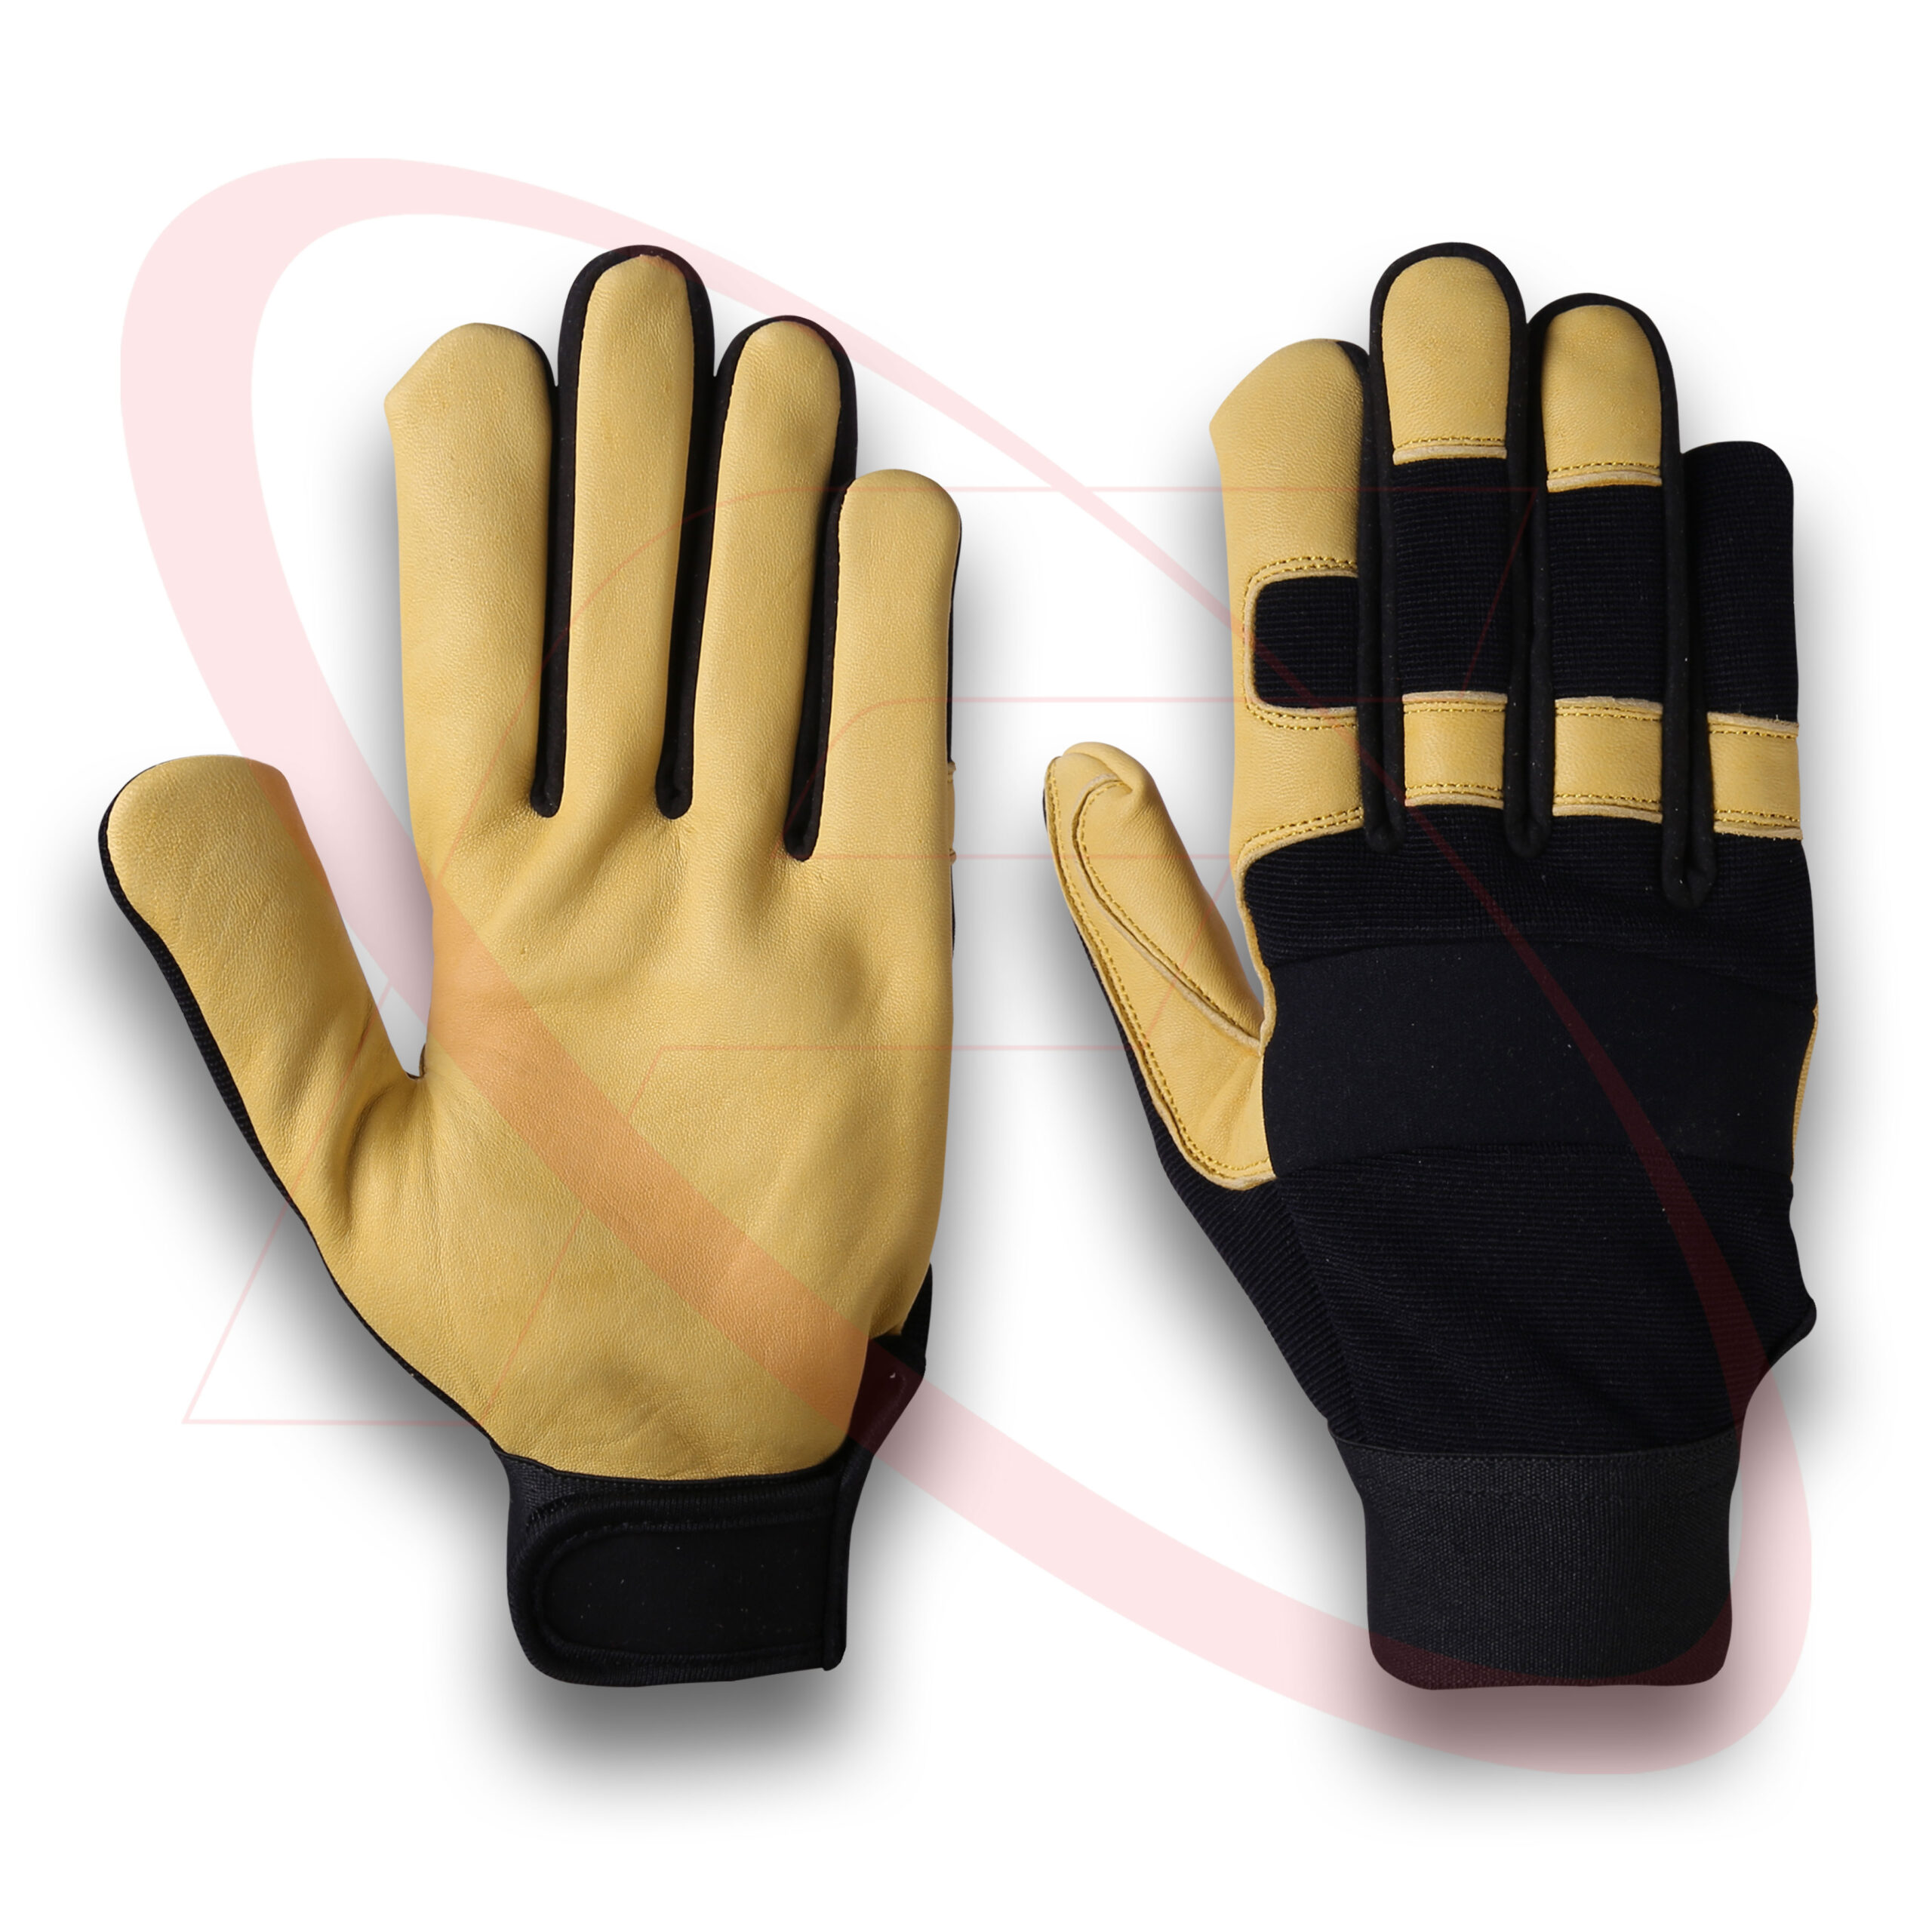 Mechanic Gloves with Goatskin Palm / Superb Mechanic Gloves, Top Quality Goatskin Mechanic Gloves